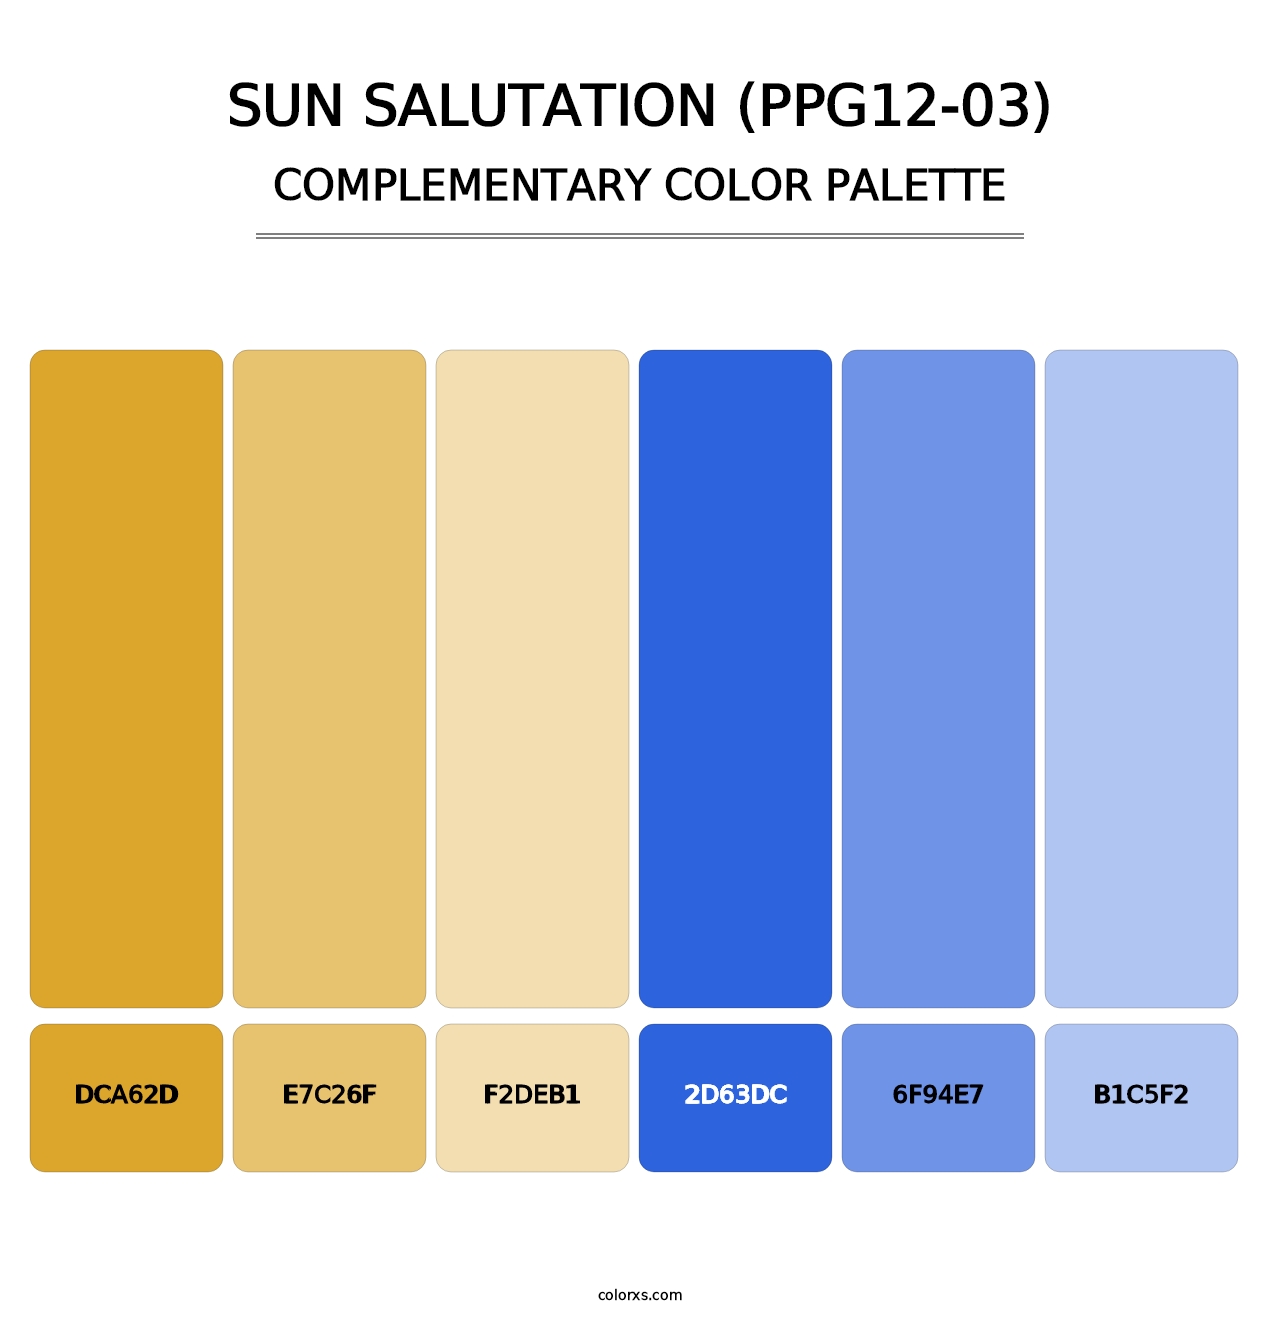 Sun Salutation (PPG12-03) - Complementary Color Palette